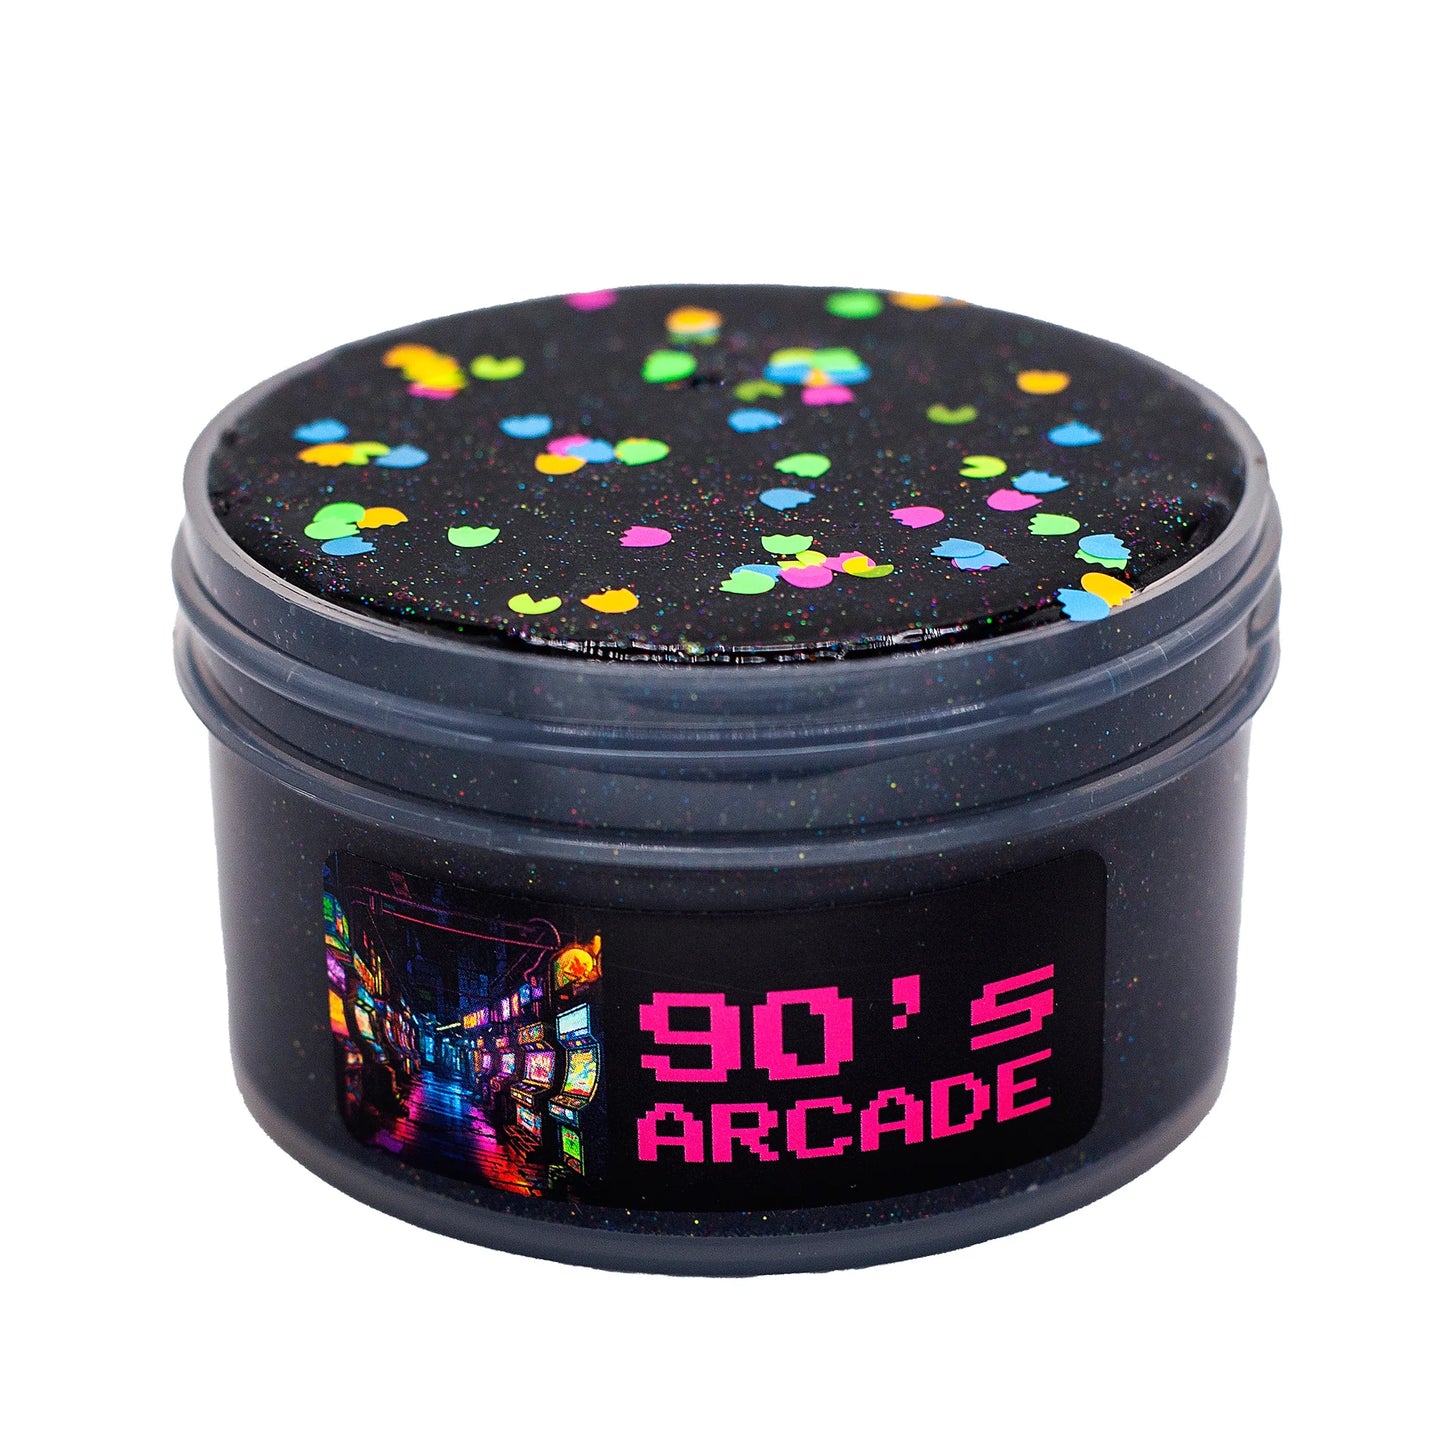 90’s Arcade Slime